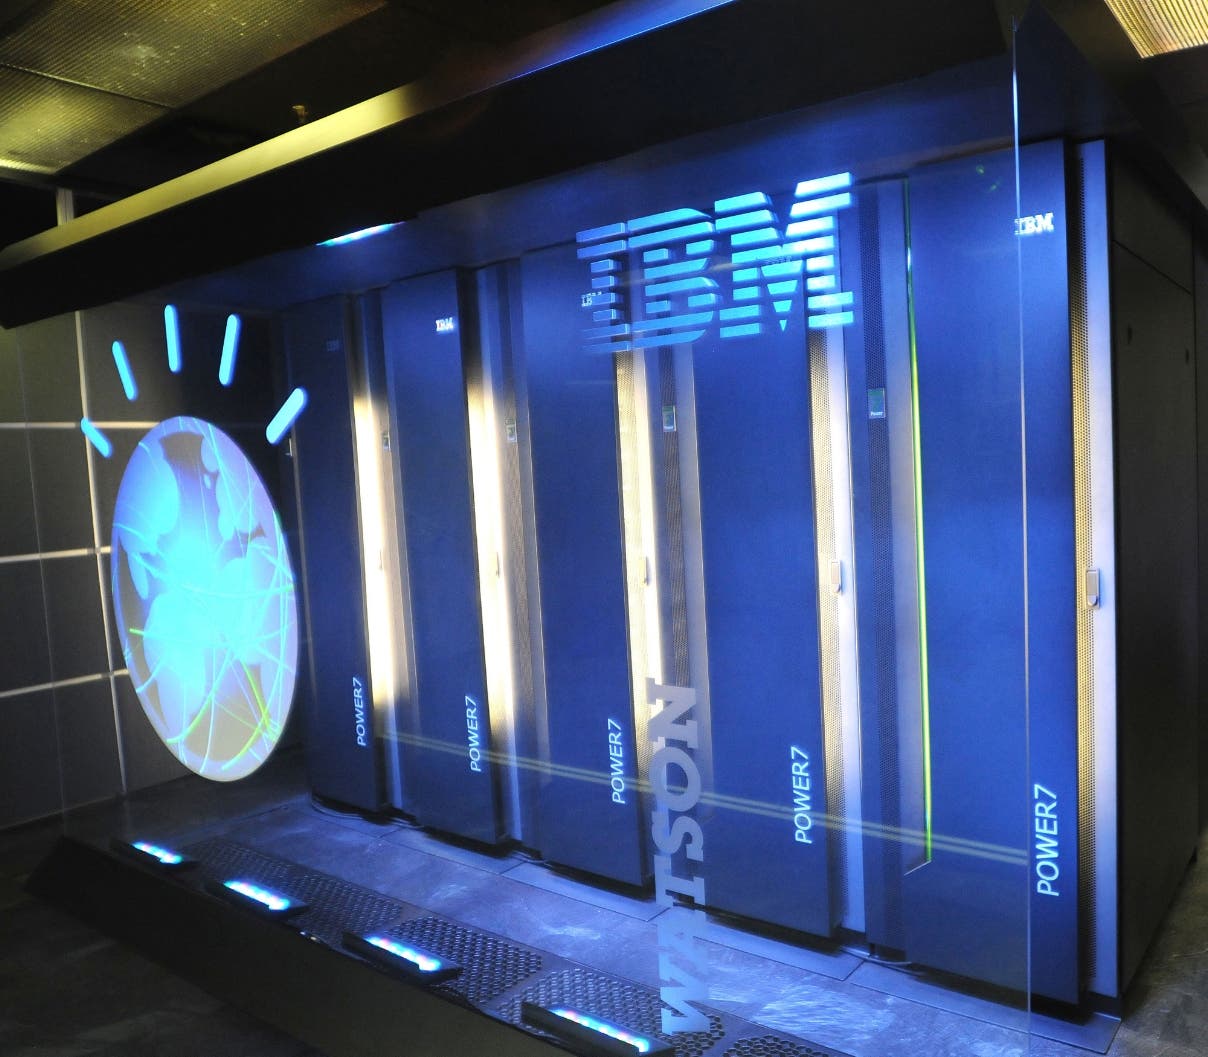 China analiza el retiro de servidores de IBM